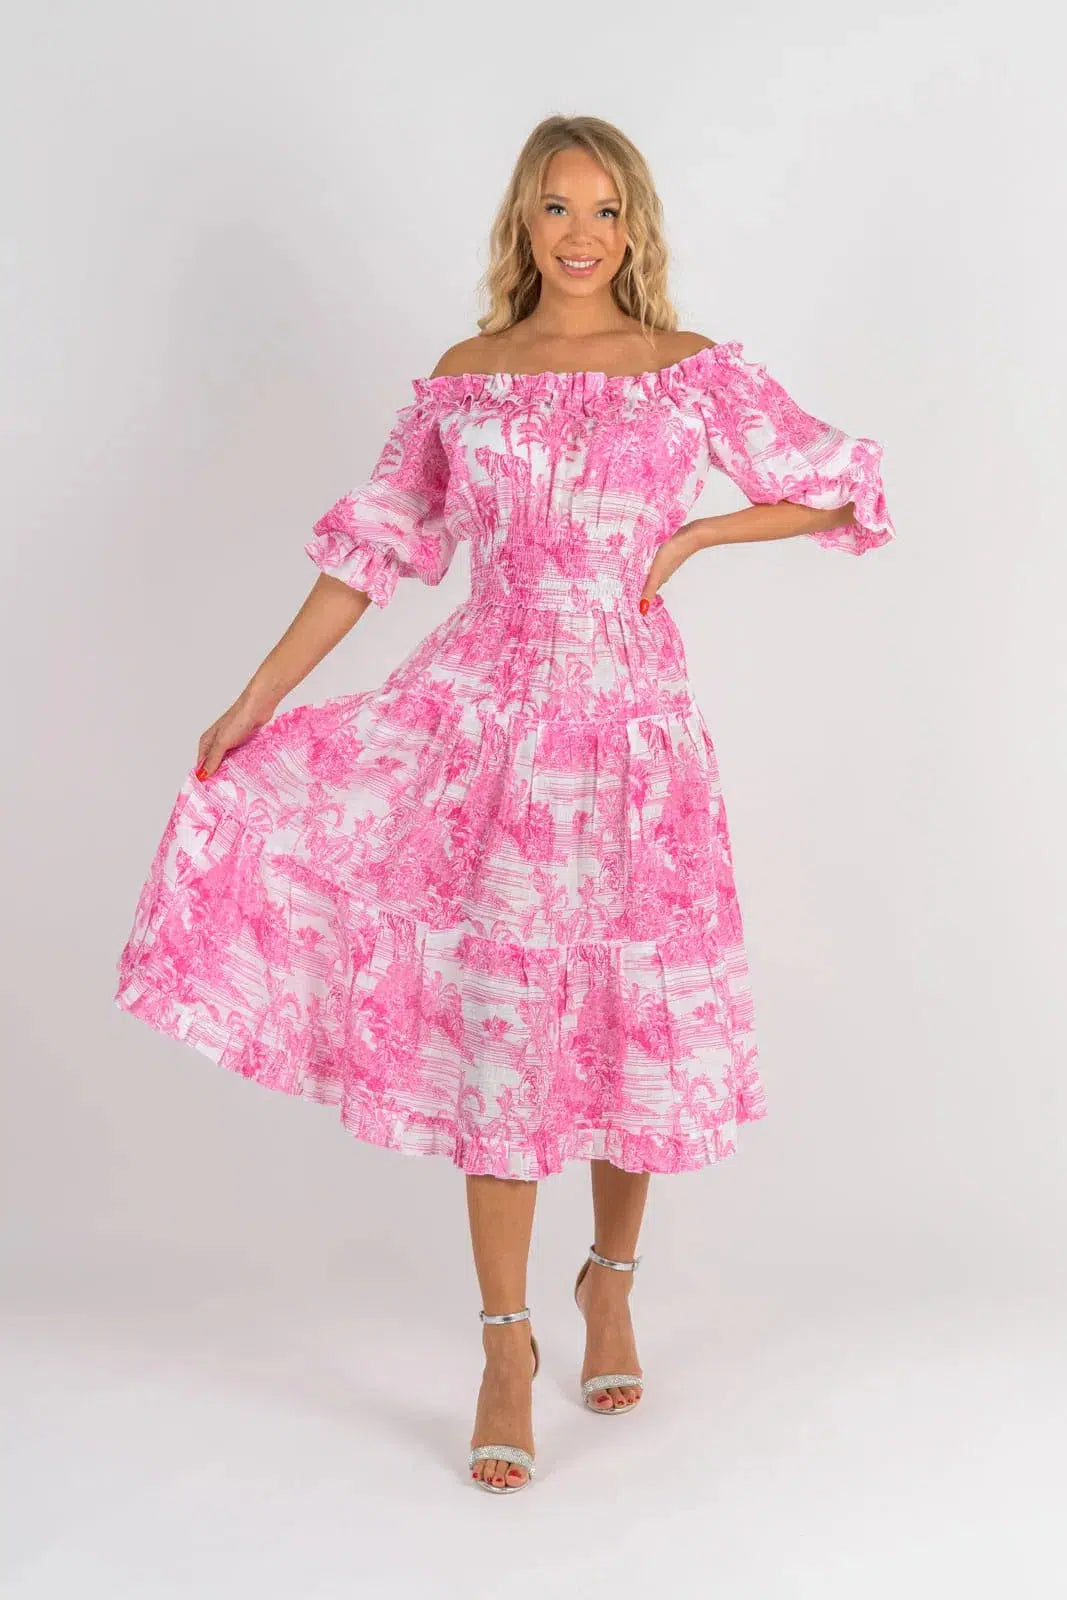 Positano Zoe Dress - Premium Dresses from Marina St. Barth - Just $530.00! Shop now at Marina St Barth